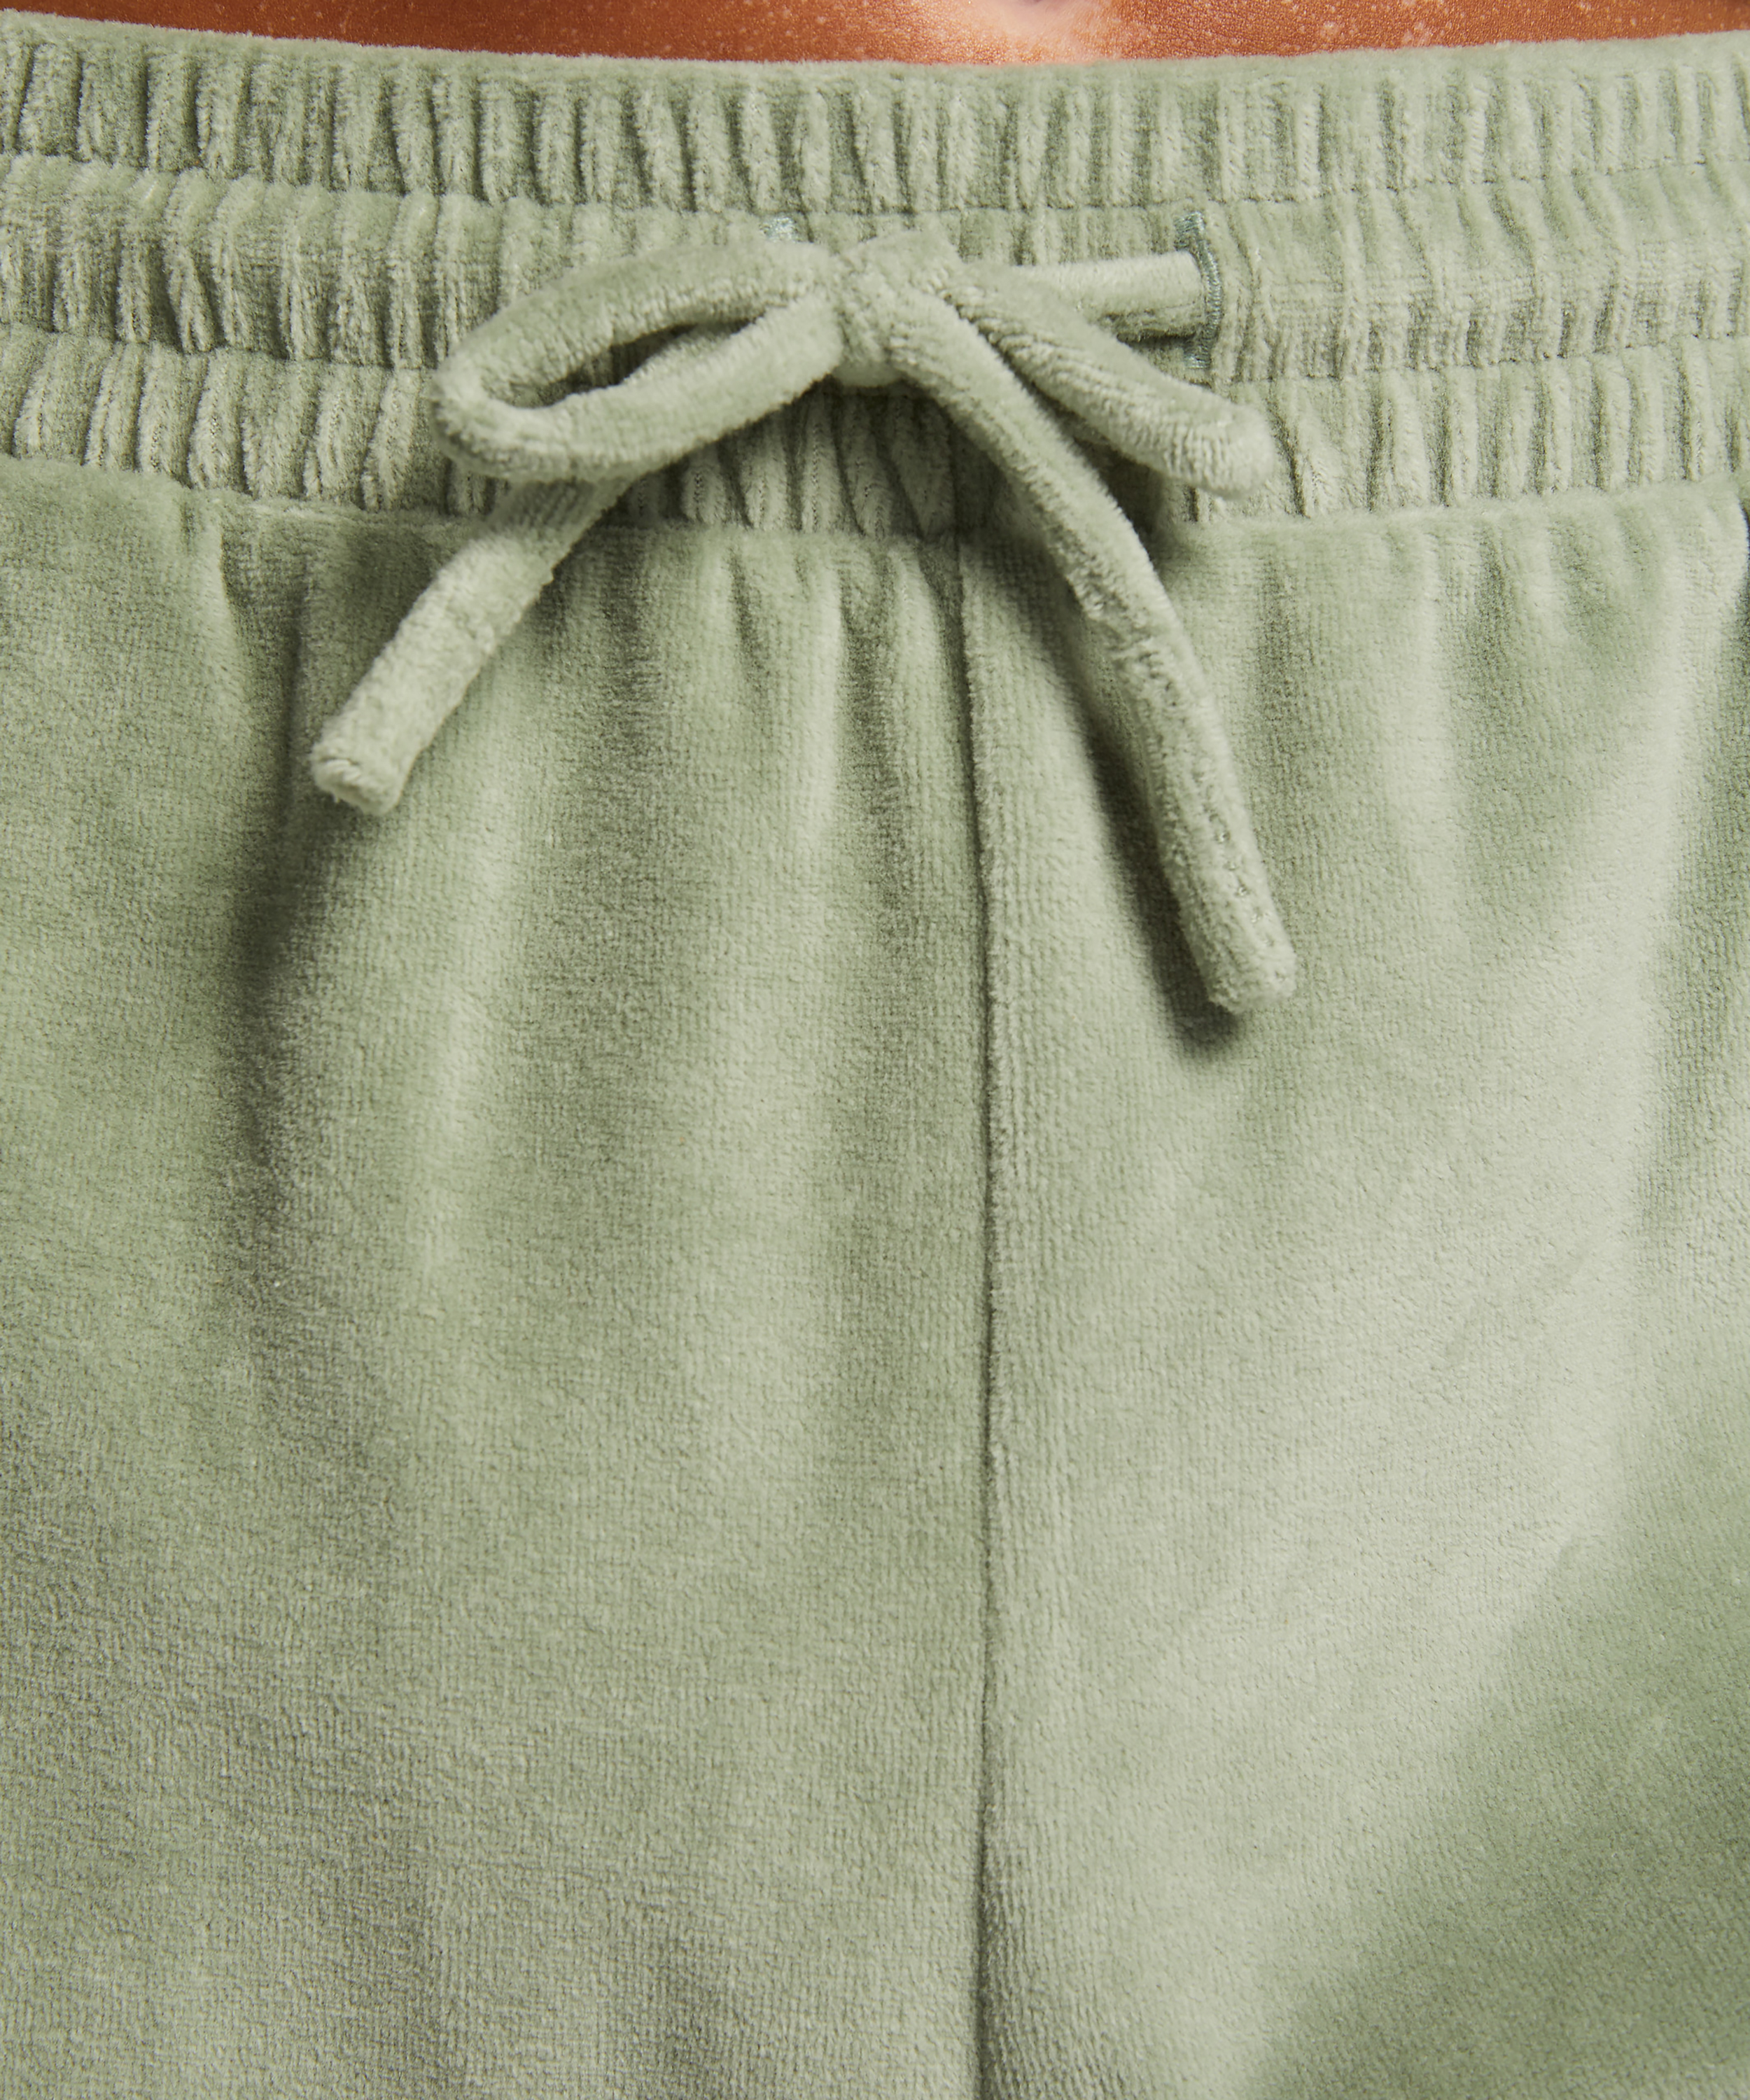 Pantalón de pijama de terciopelo, Verde, main